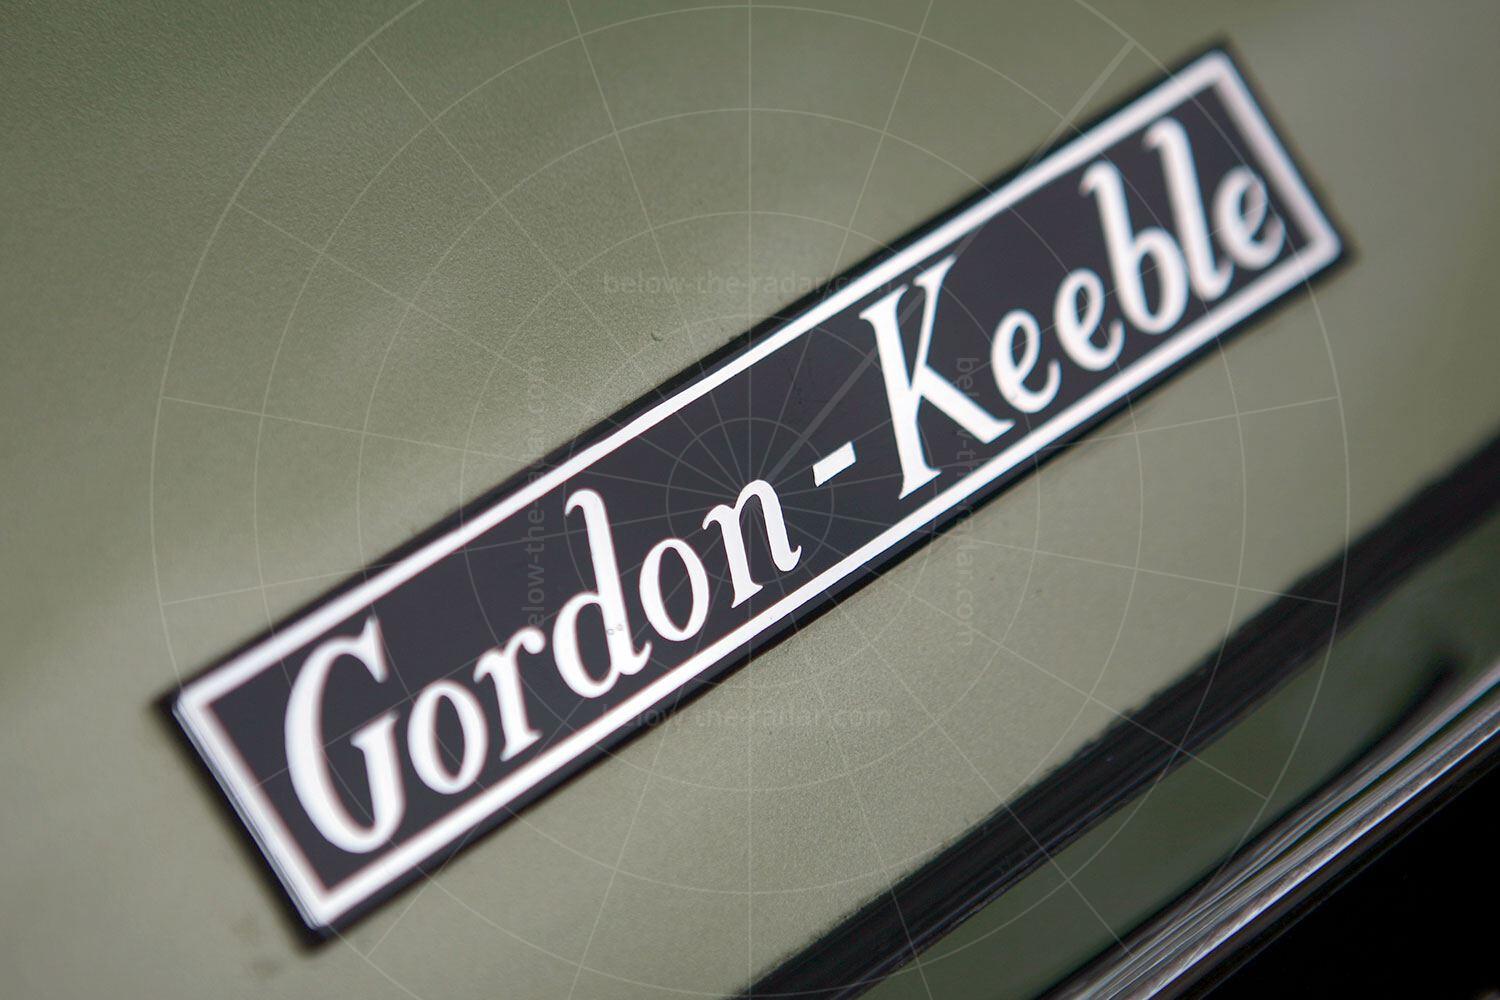 Gordon-Keeble GT badge Pic: magiccarpics.co.uk | Gordon-Keeble GT badge